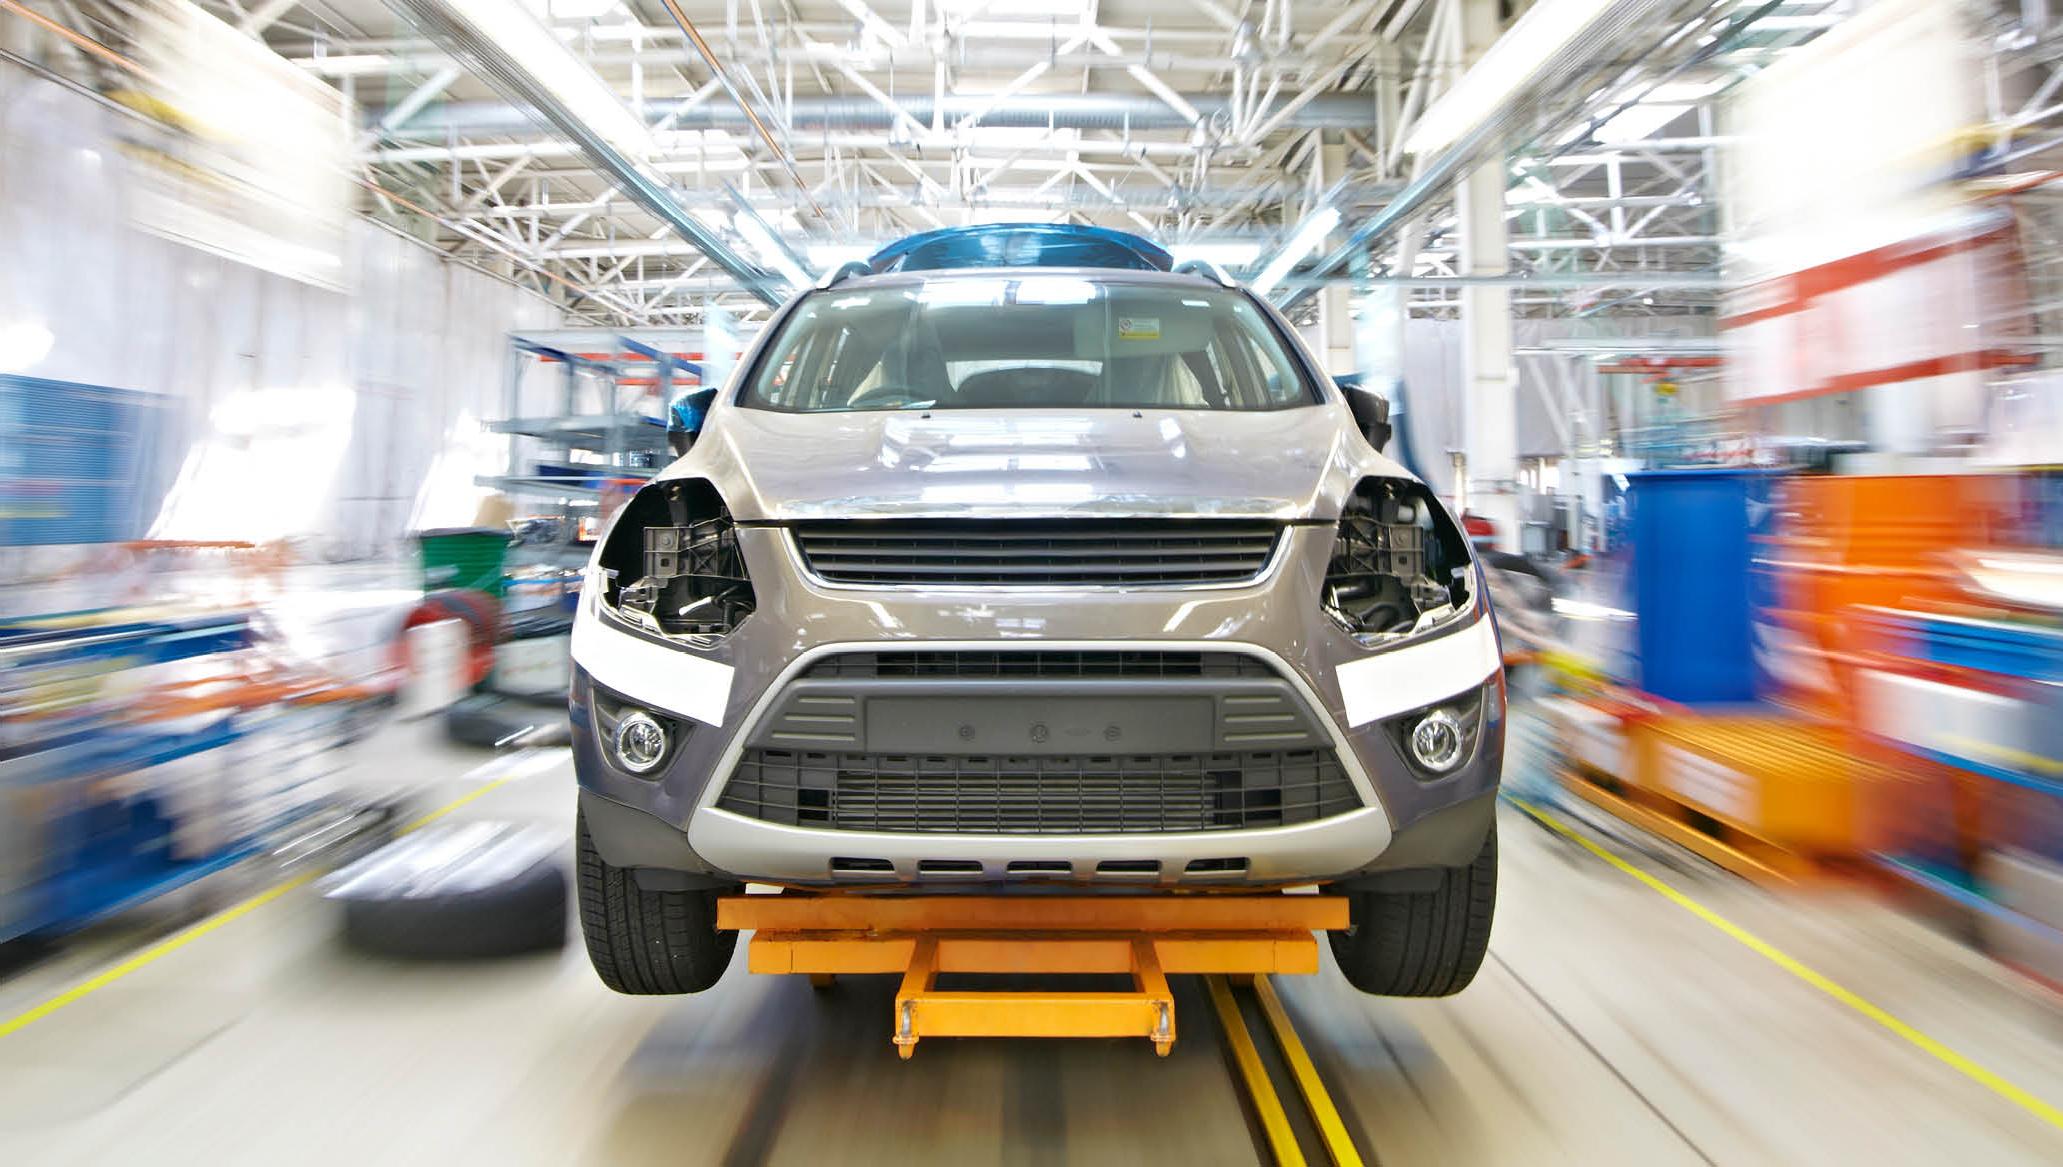 The world's leading automotive product recall company